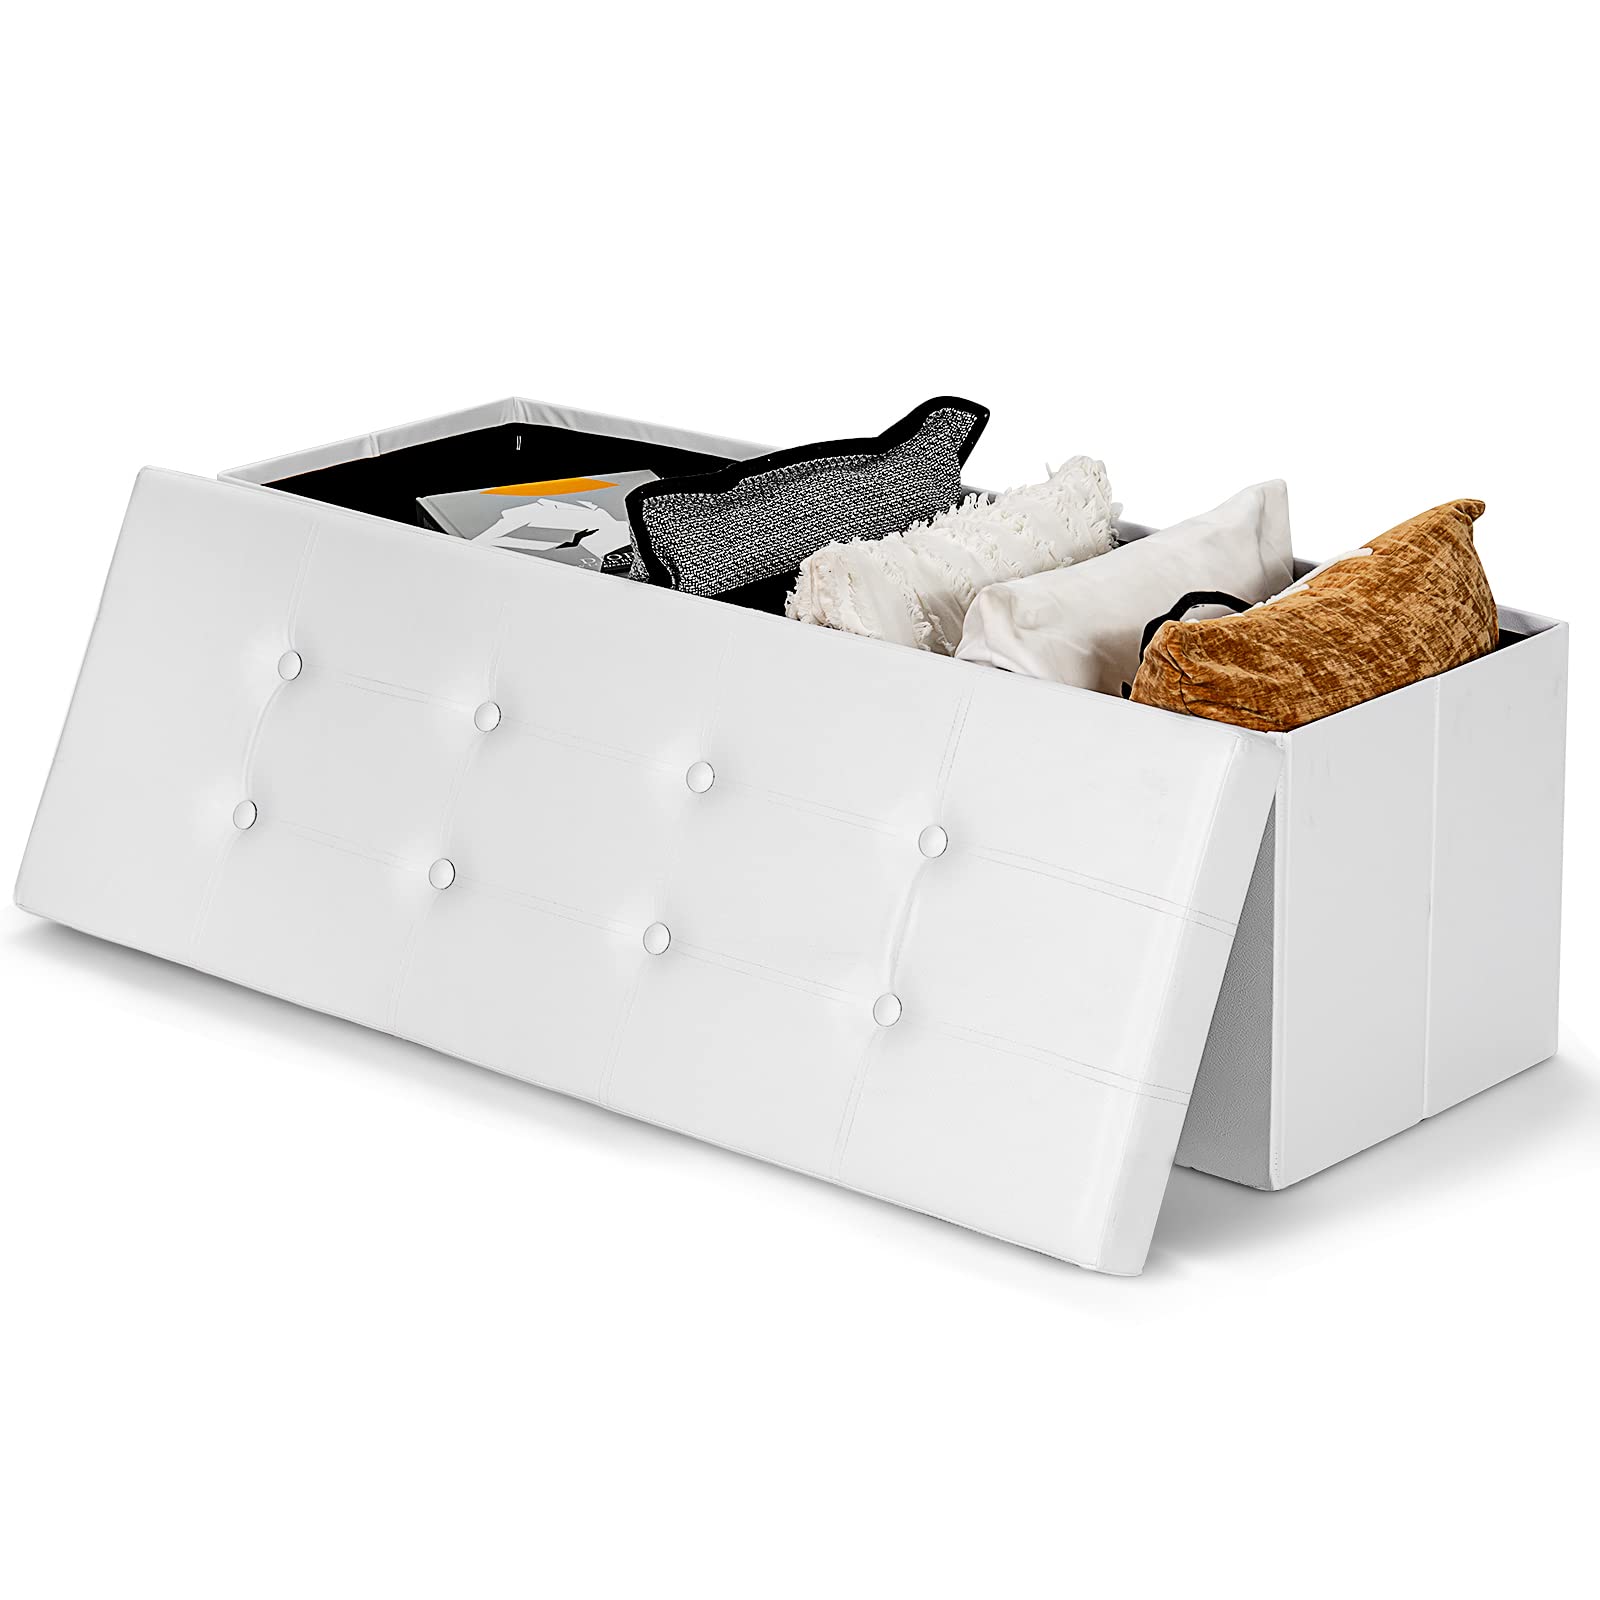 Giantex 45" Folding Storage Ottoman Bench, Faux Leather